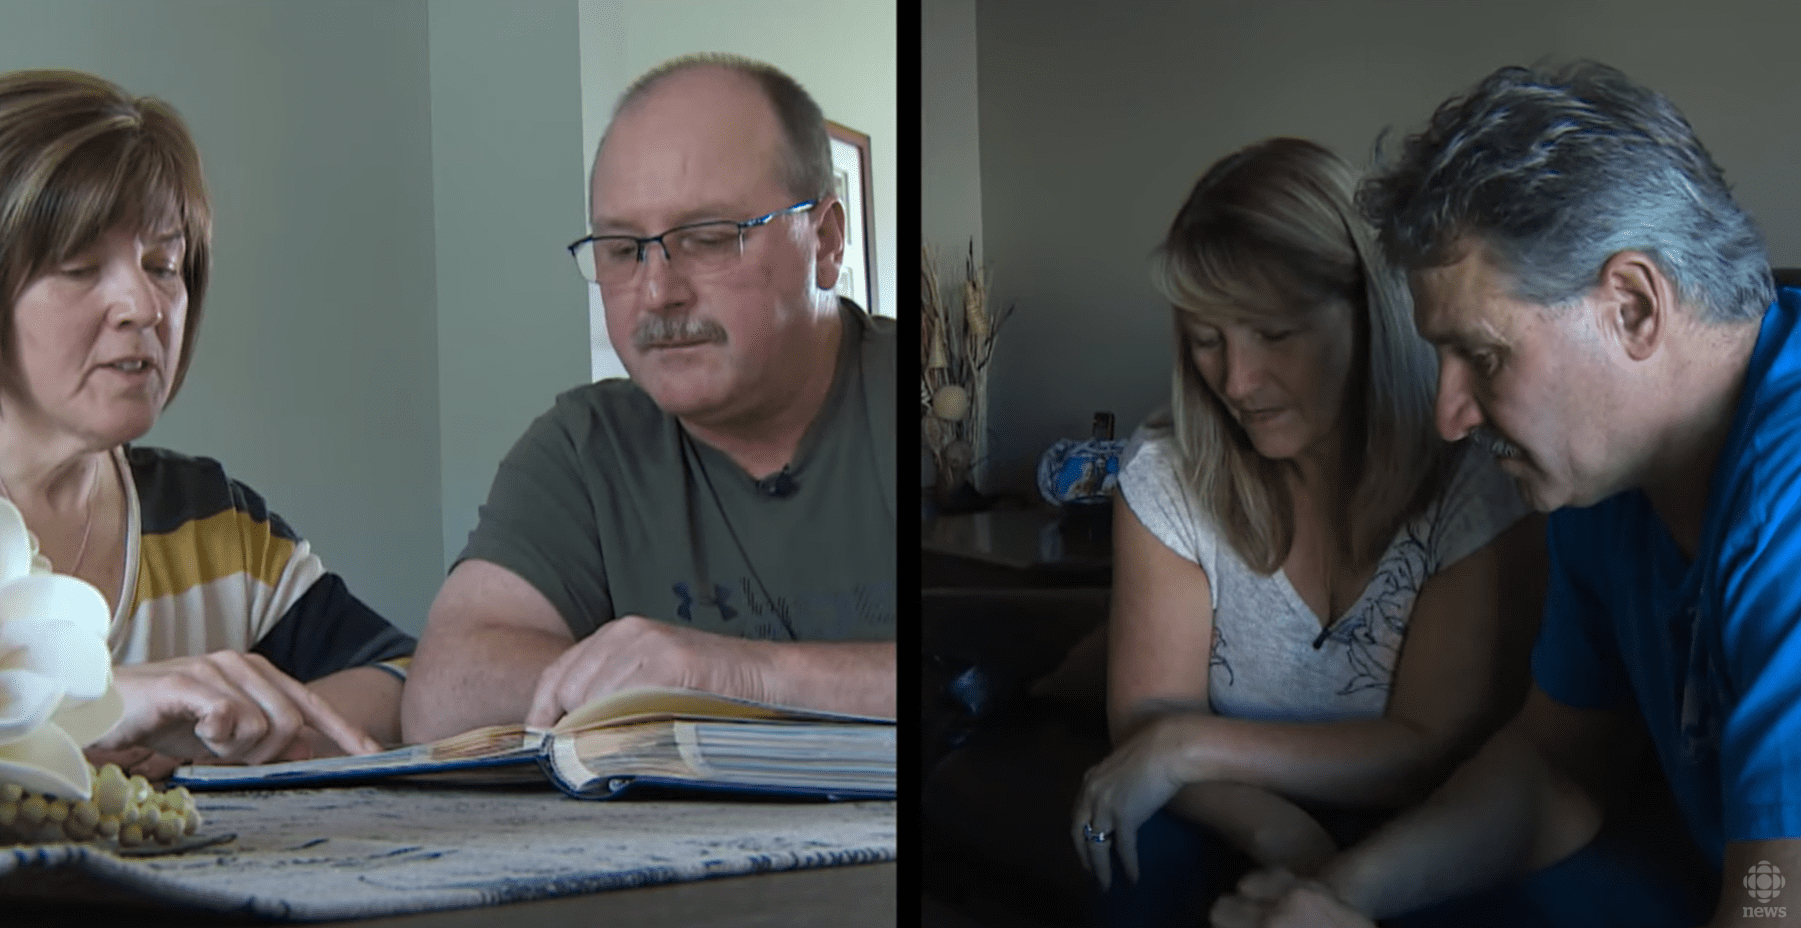 [Links] Craig Avery mit seiner Frau; [Rechts] Clarence Hynes mit seiner Frau. | Quelle: Youtube.com/CBC News: The National